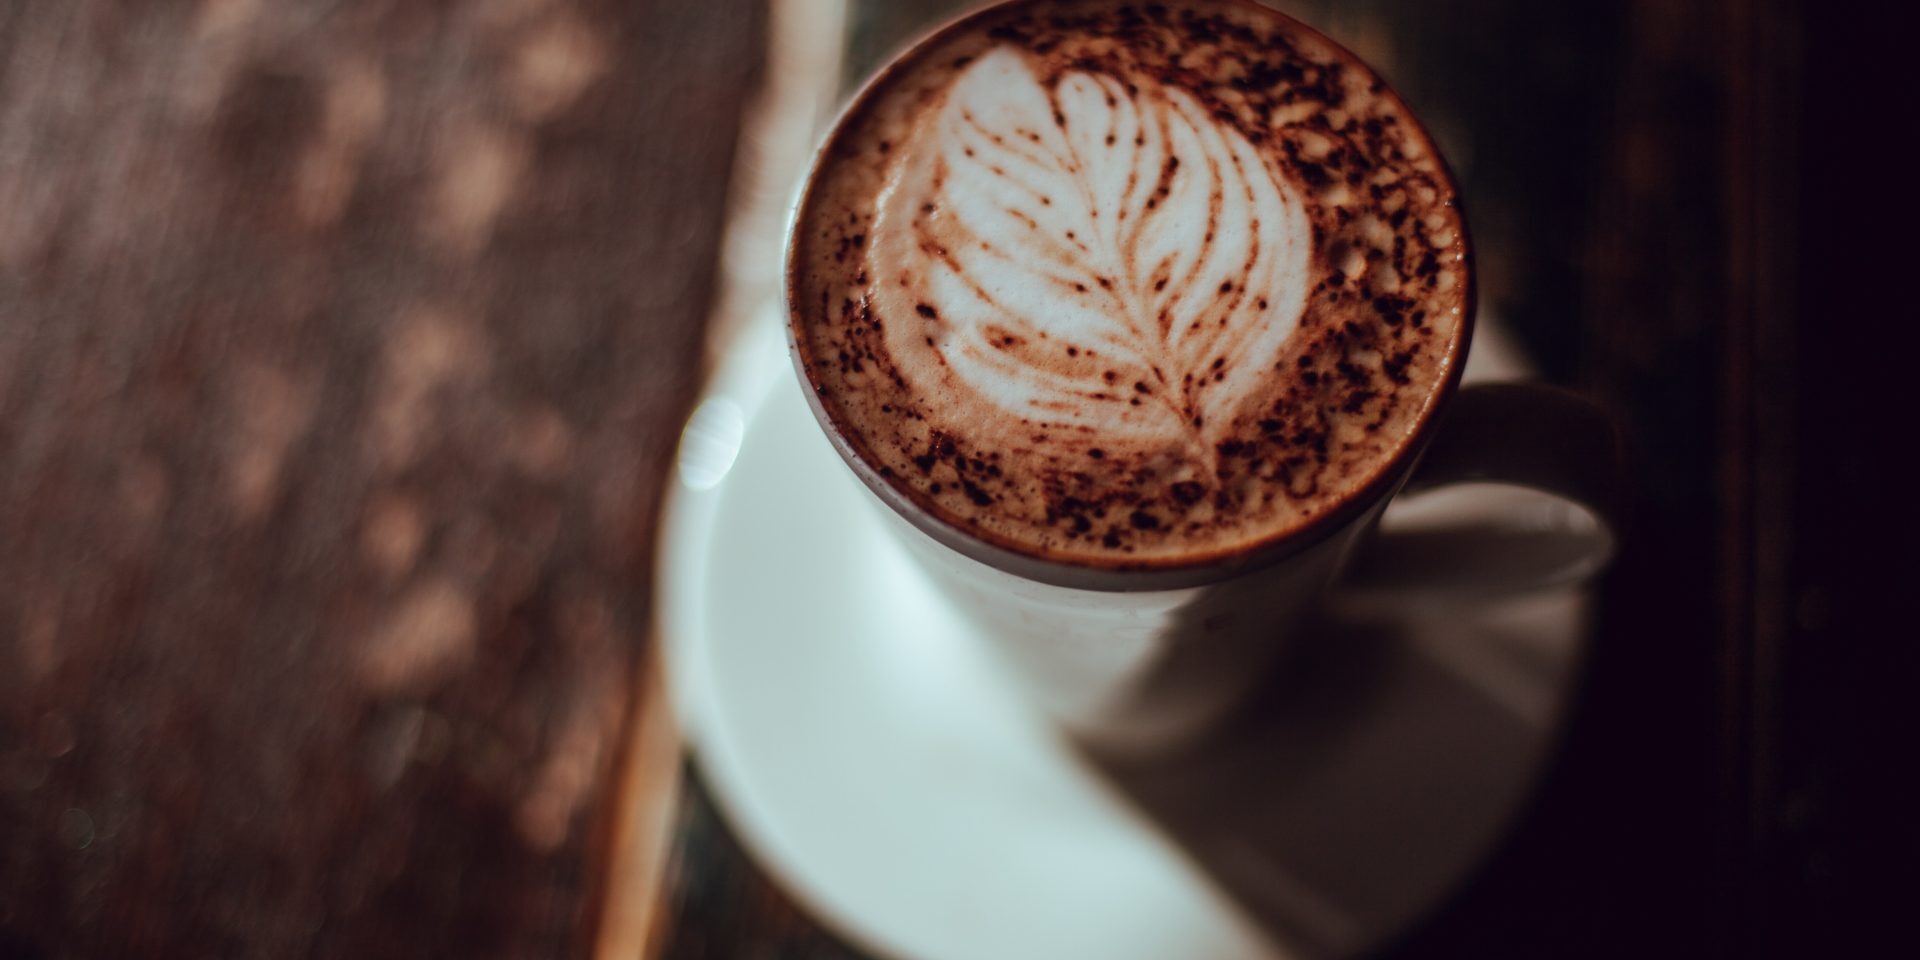 coffee in white mug with latte art against dark wooden background – JDE recruitment case study